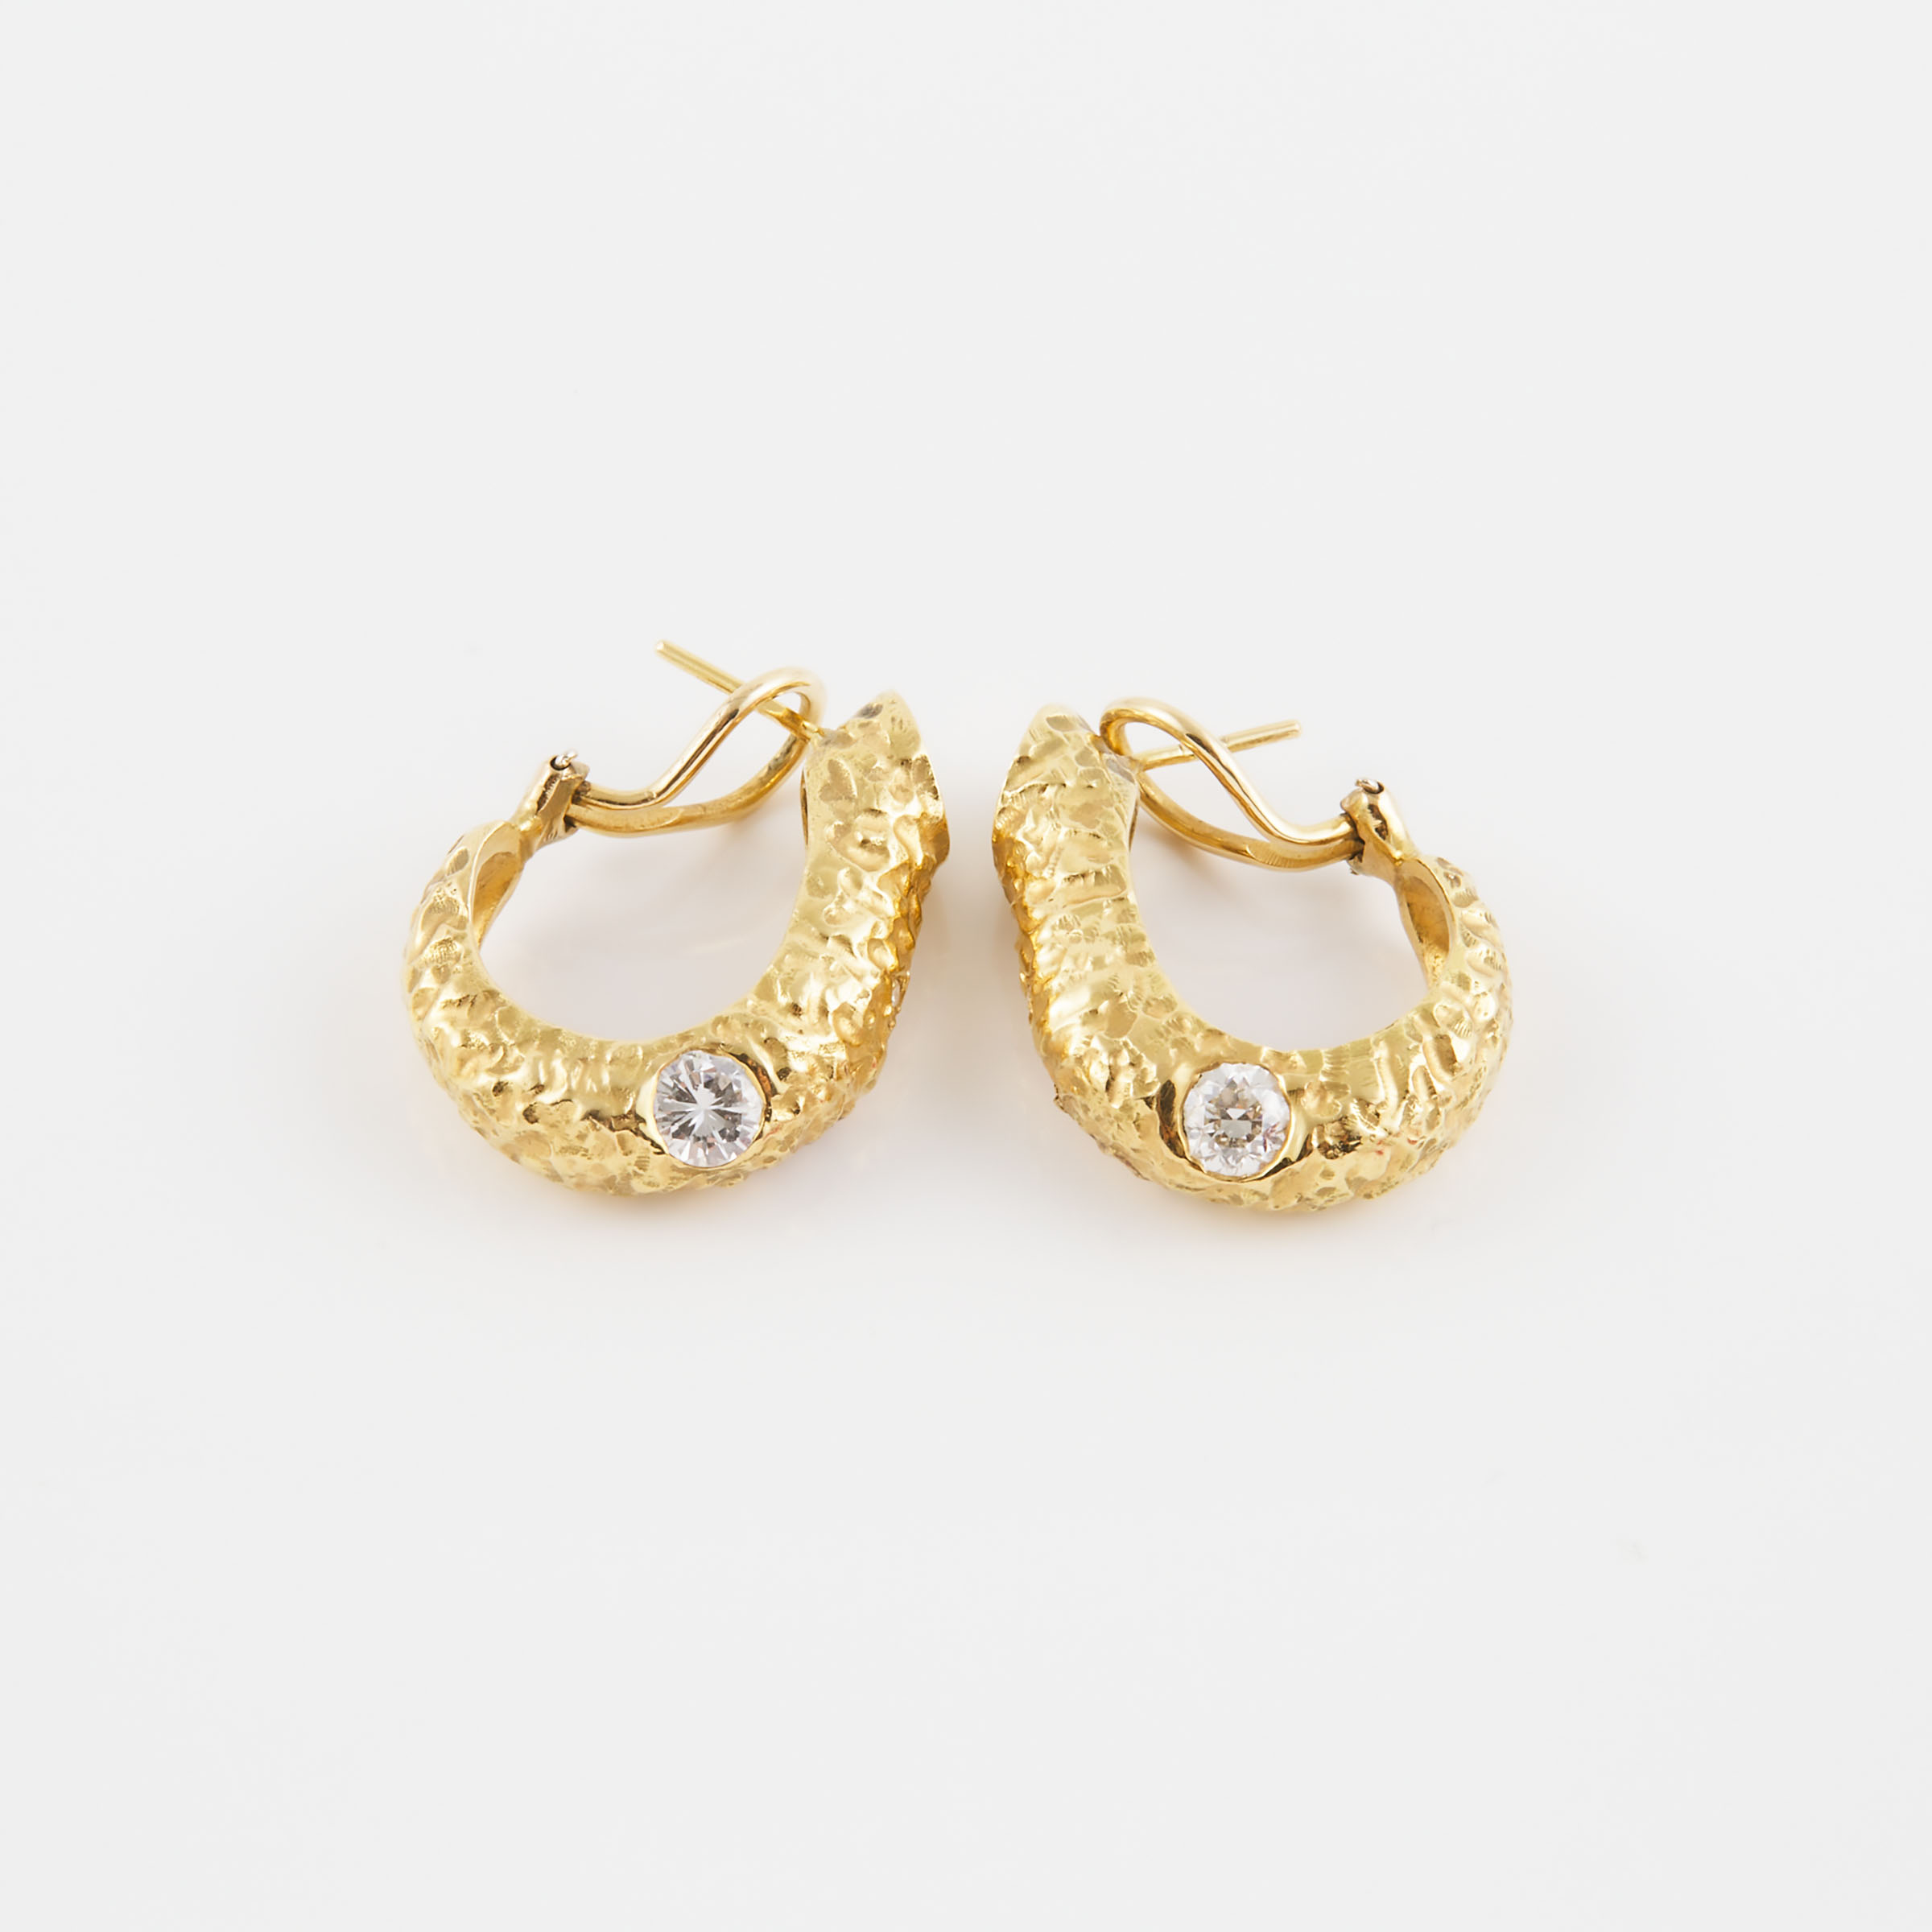 Pair Of Beni Sung 18k Yellow Gold Earrings